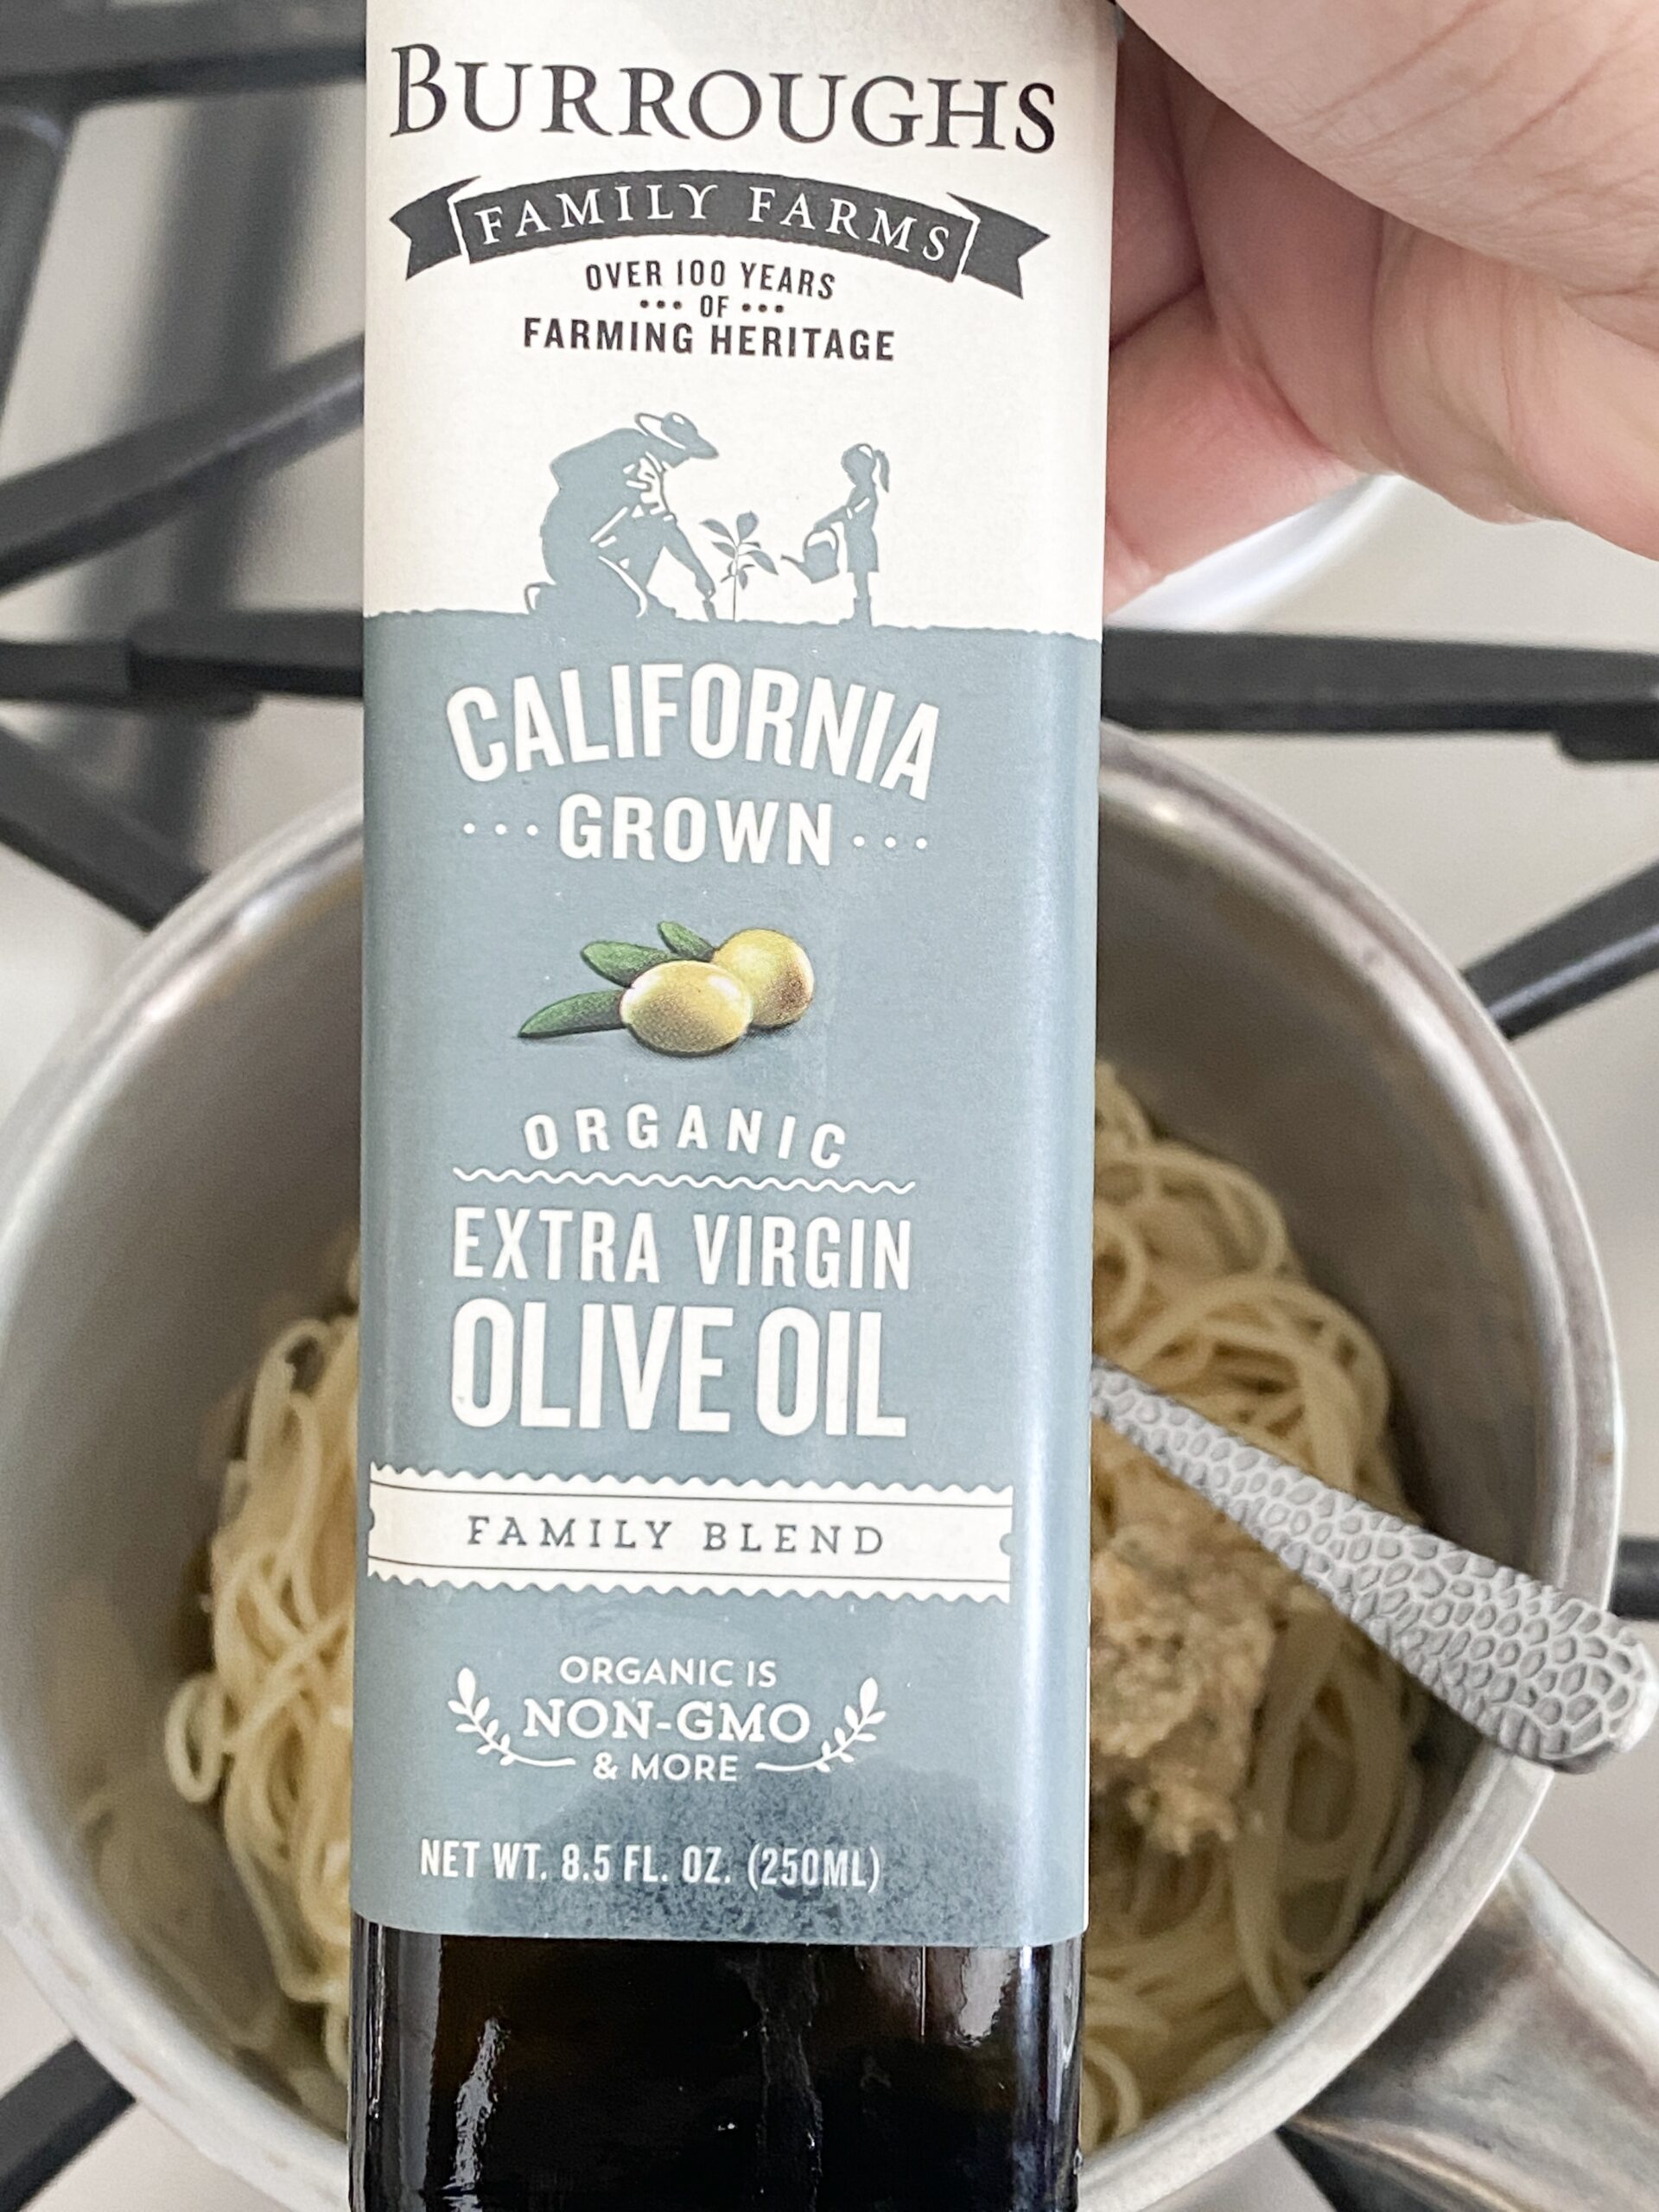 burroughs farm olive oil in a bottle